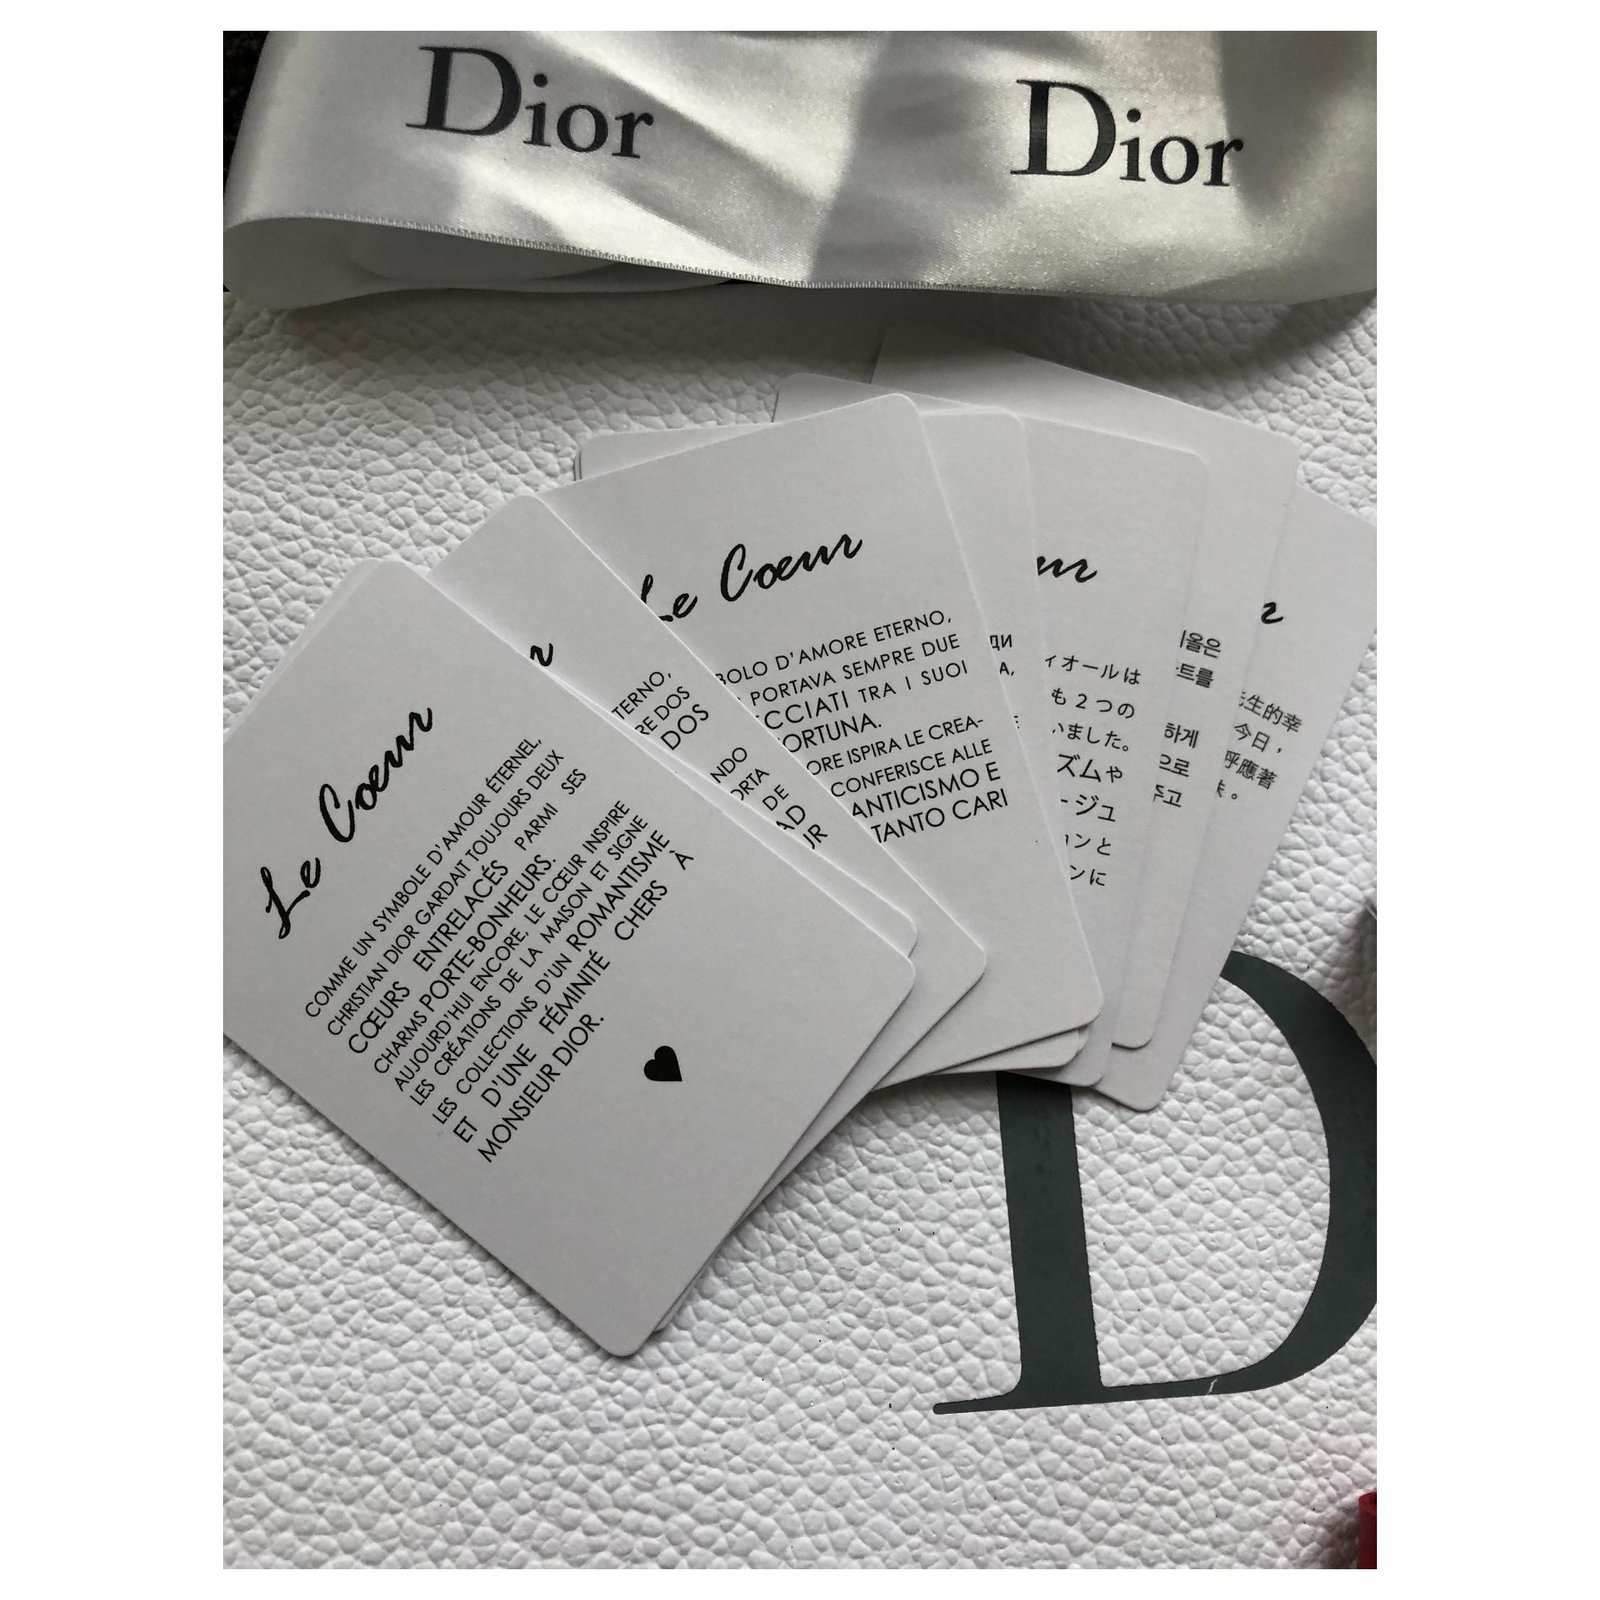 Vip membership dior Christian Dior